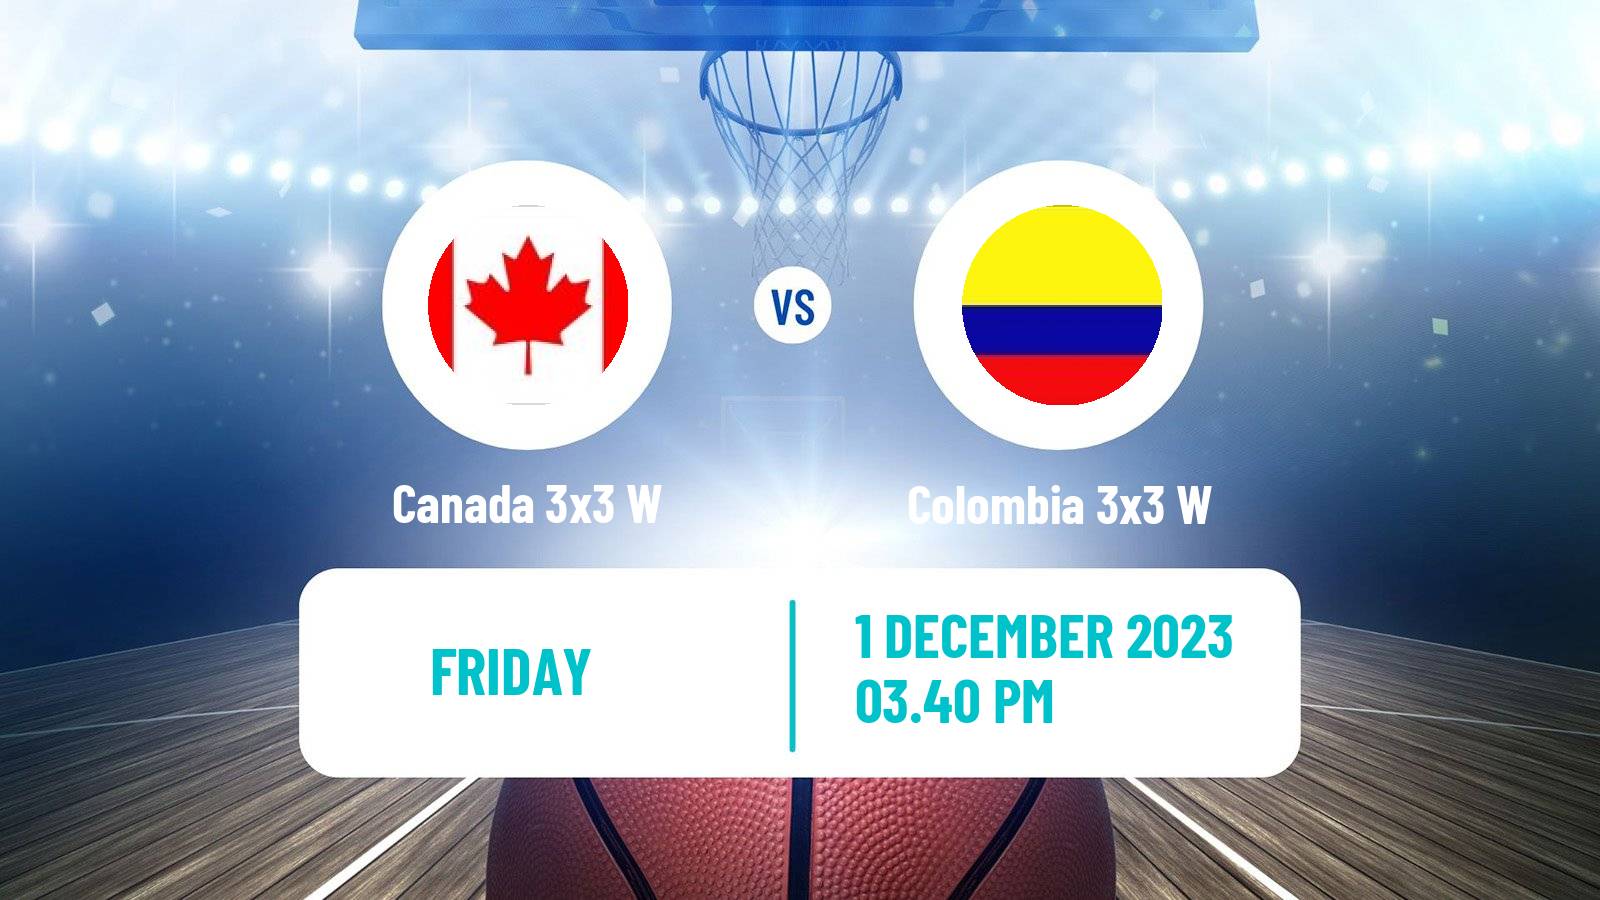 Basketball Americup 3x3 Women Canada 3x3 W - Colombia 3x3 W